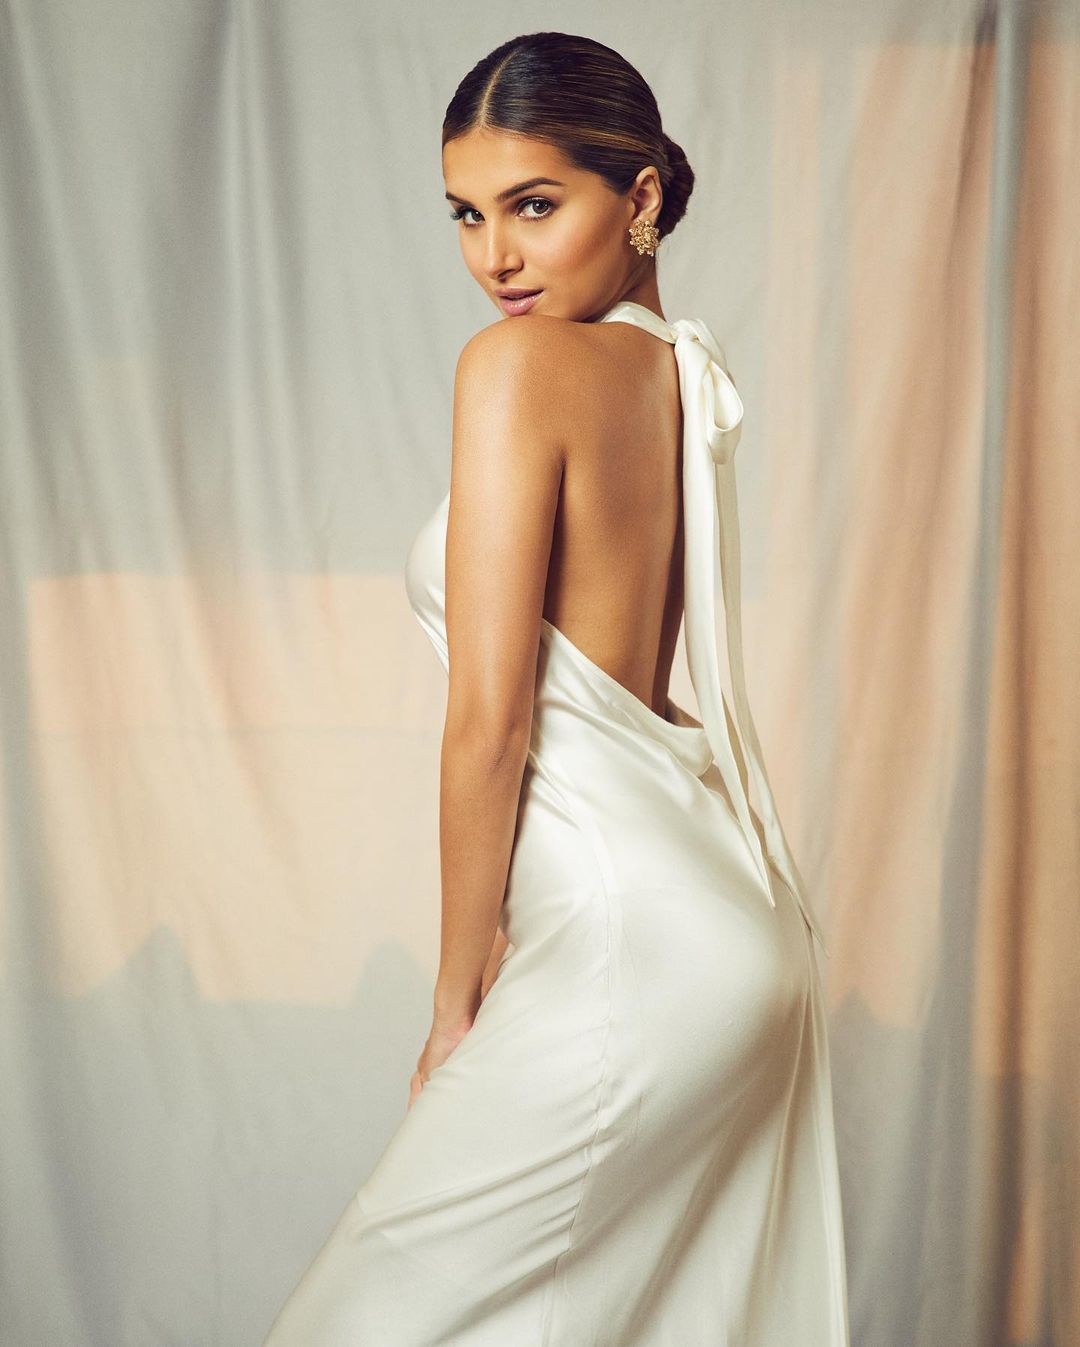 Tara Sutaria looks super sexy in the white satin dress